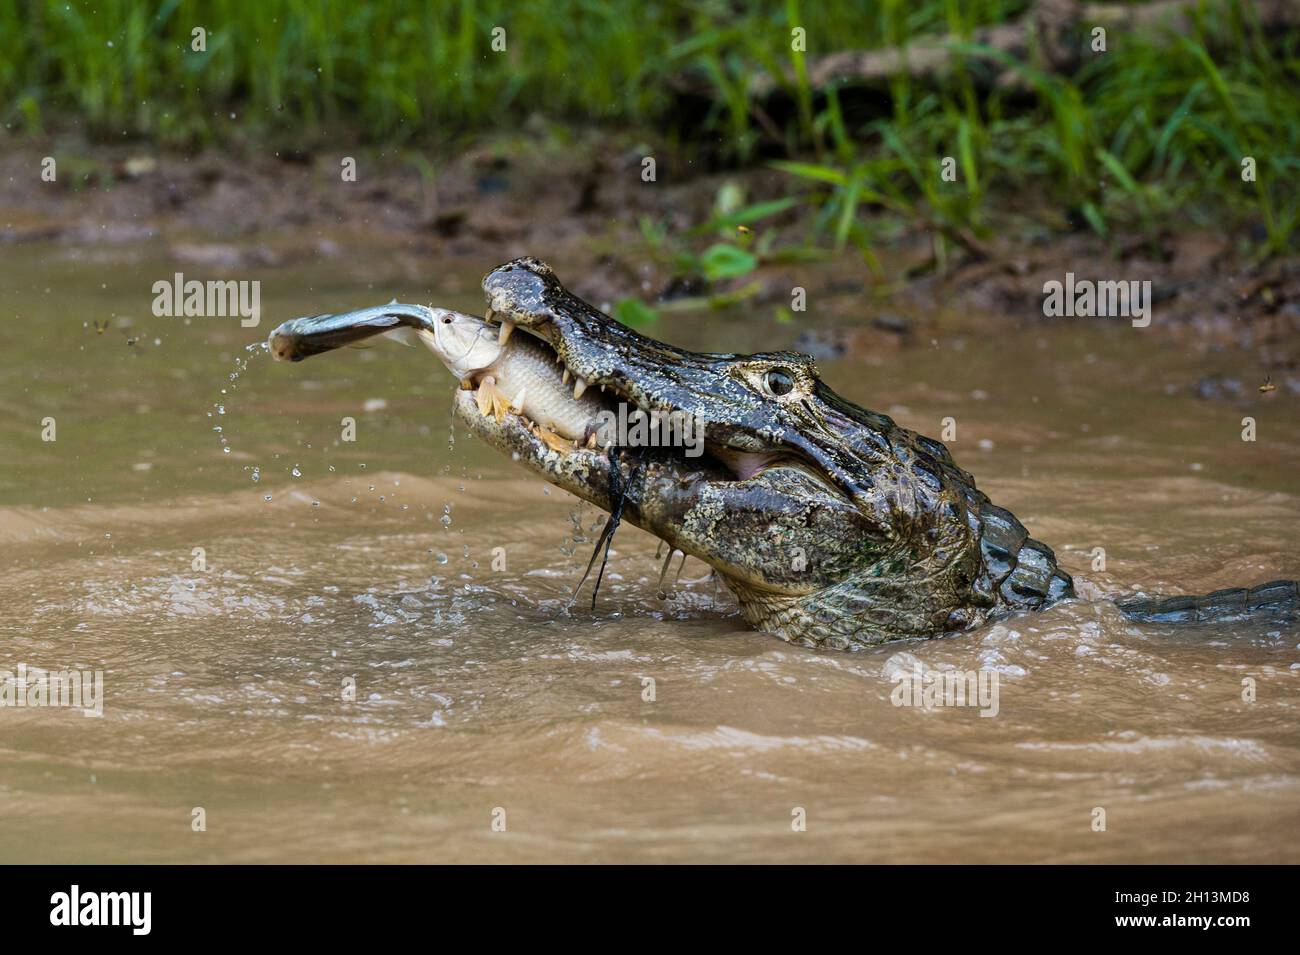 A Yacare caiman, Caiman crocodylus yacare, catching a tiger fish, Hoplias malabaricus, catching a fish in the Rio Negrinho. Pantanal, Mato Grosso, Bra Stock Photo